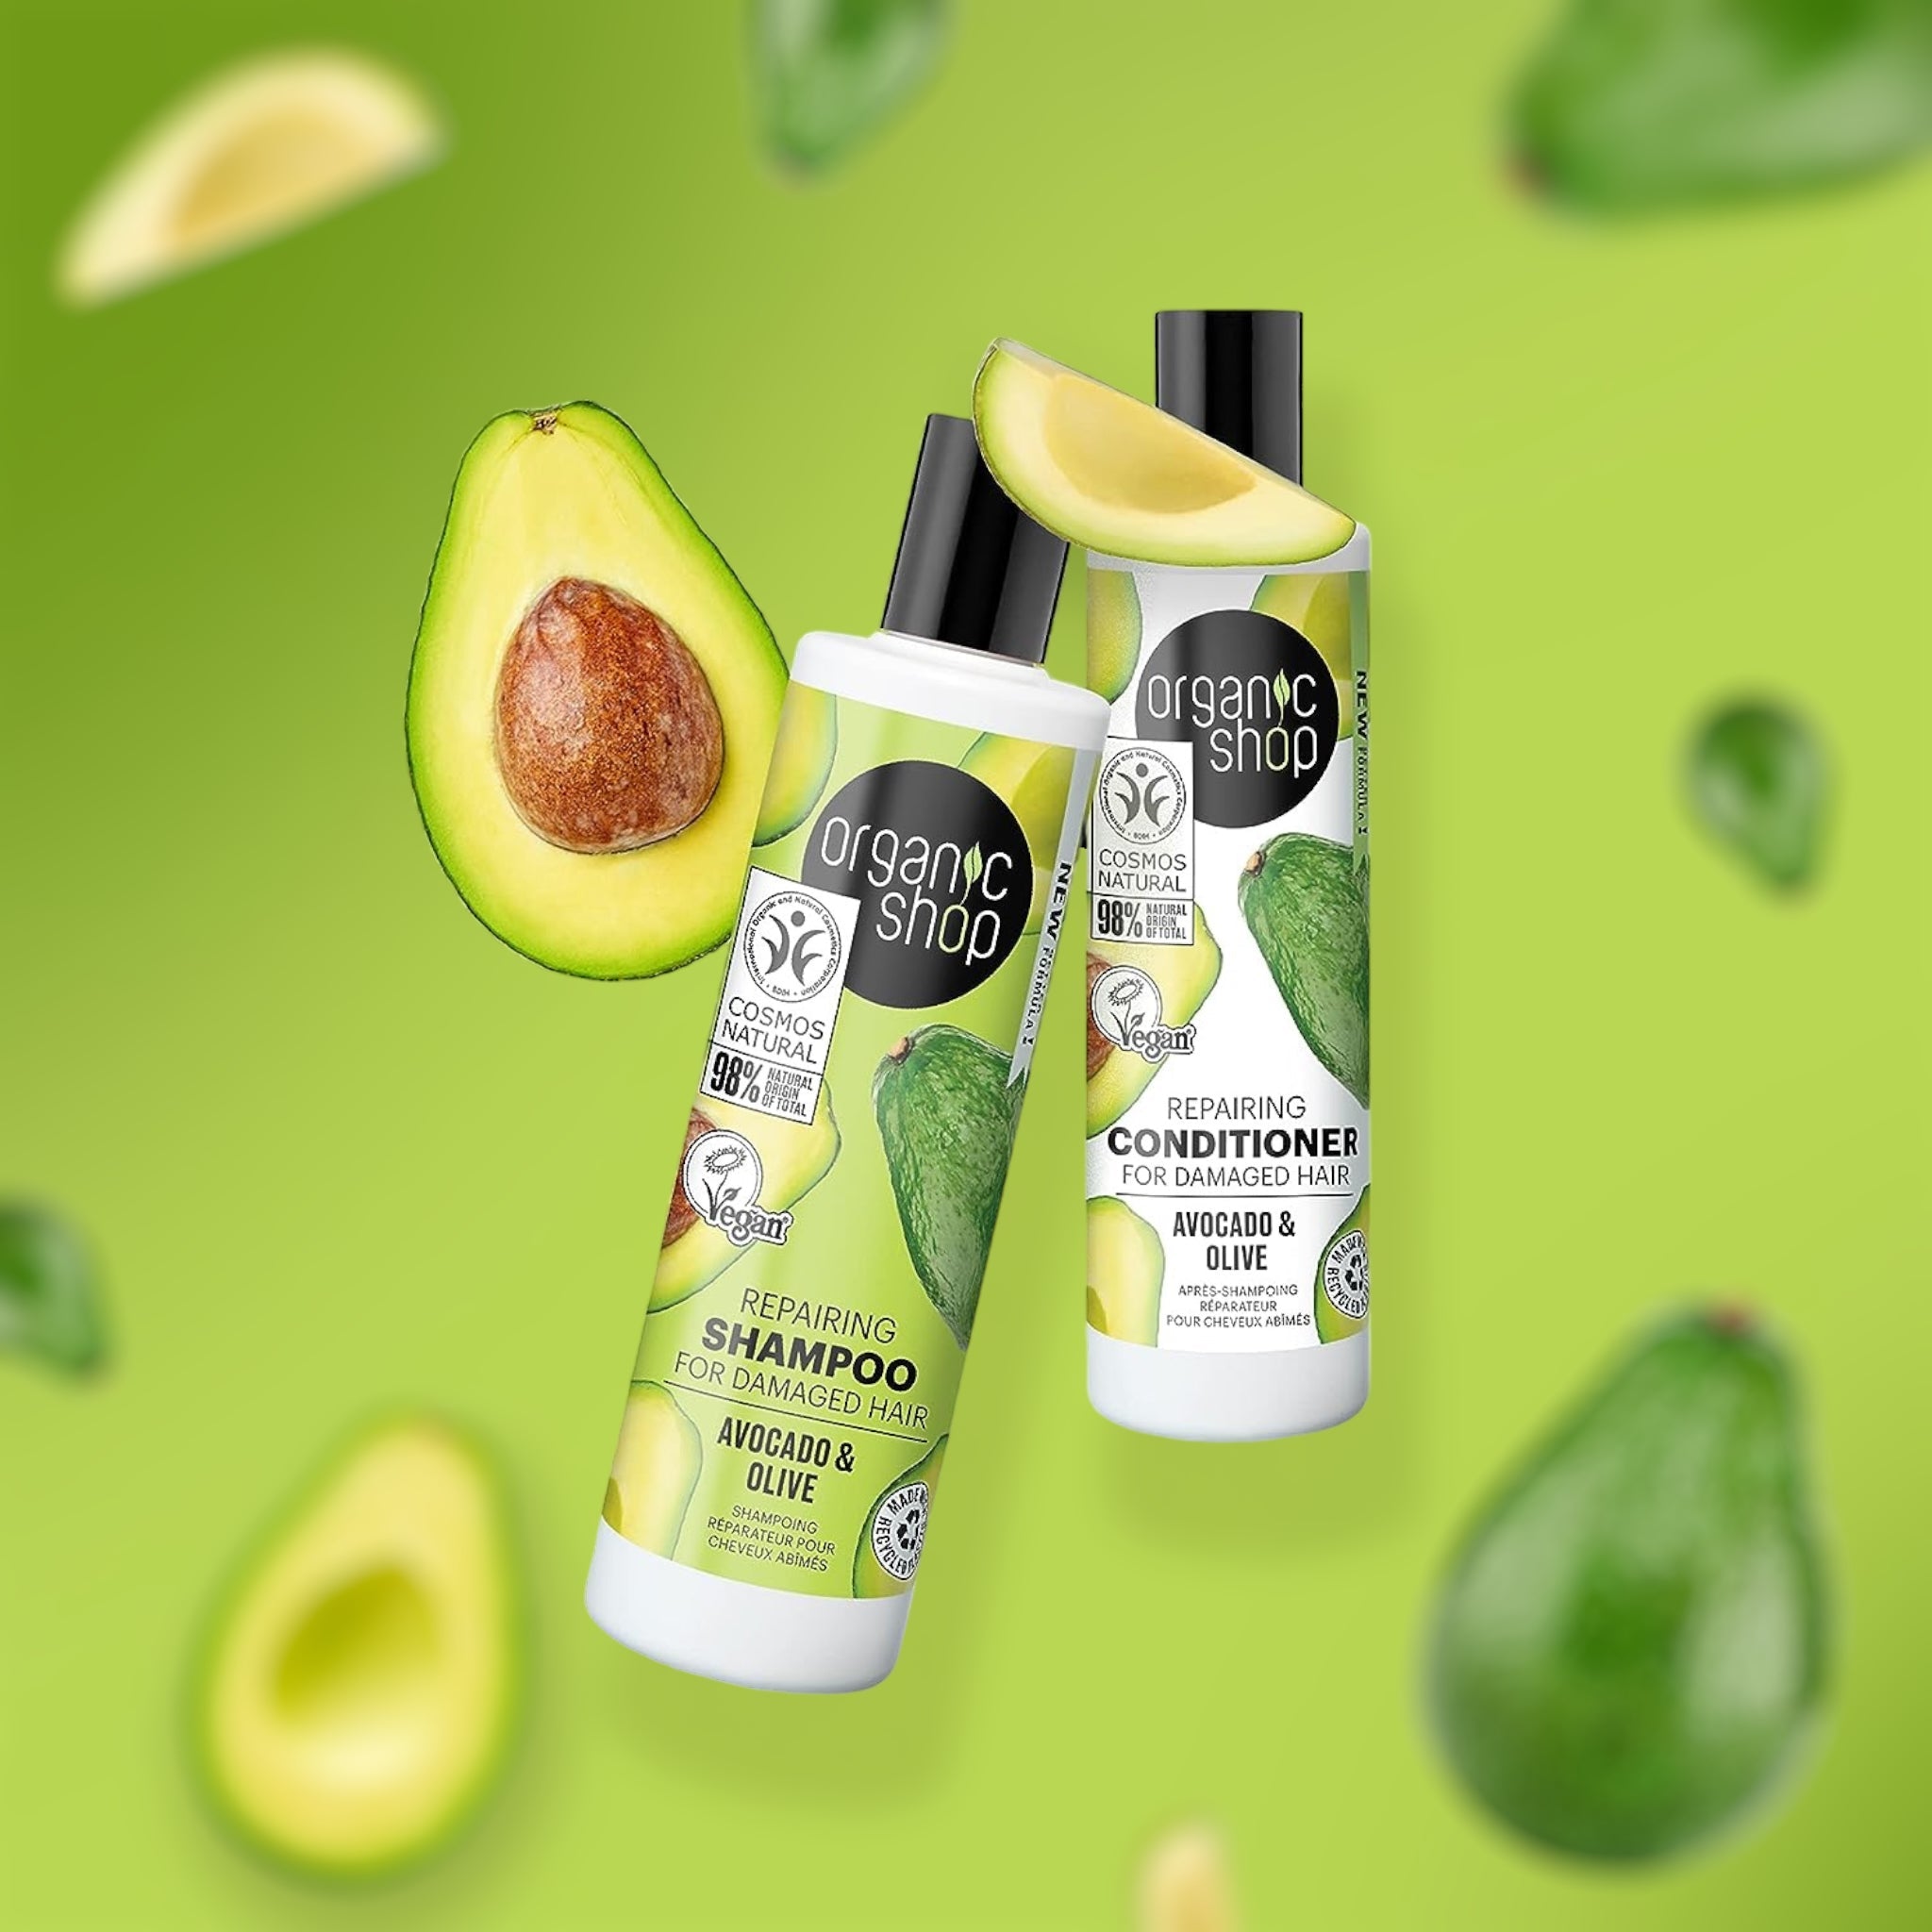 Avocado & Olive Repairing Shampoo - mypure.co.uk